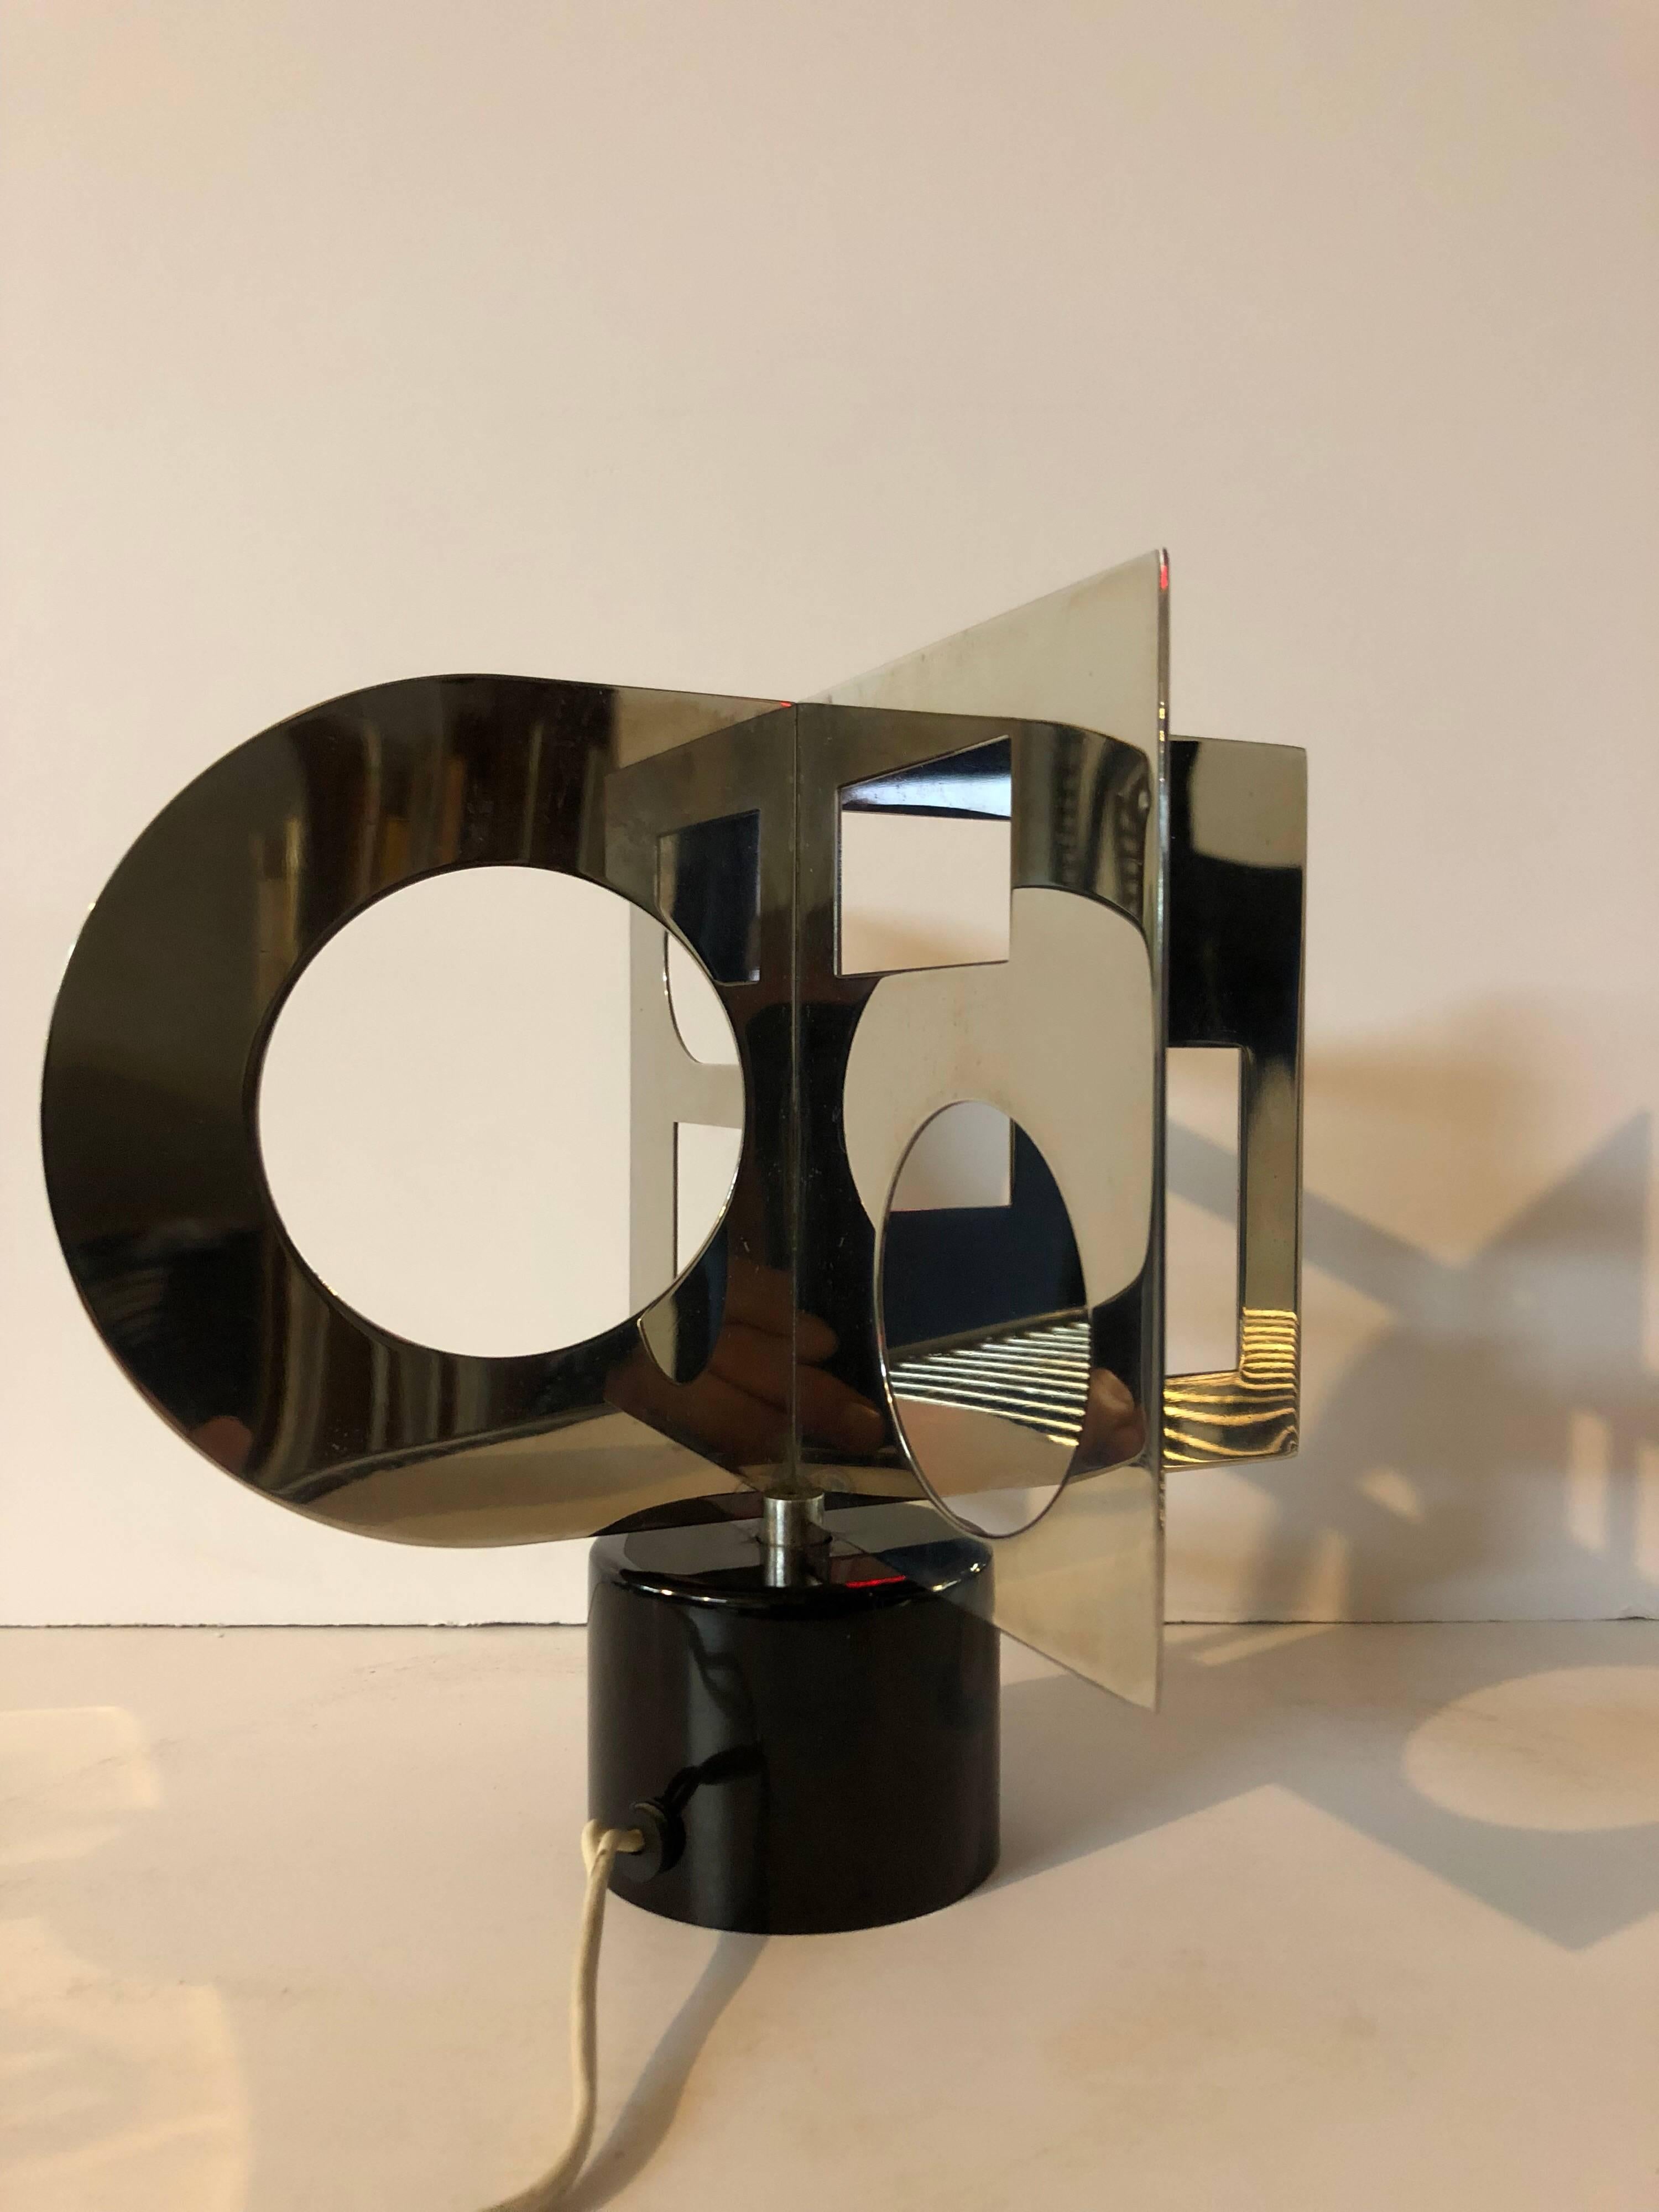 Nicolas Schöffer Abstract Sculpture - Motorized Kinetic Sculpture 'Minisculpture' Op Art Denise Rene Galerie Paris